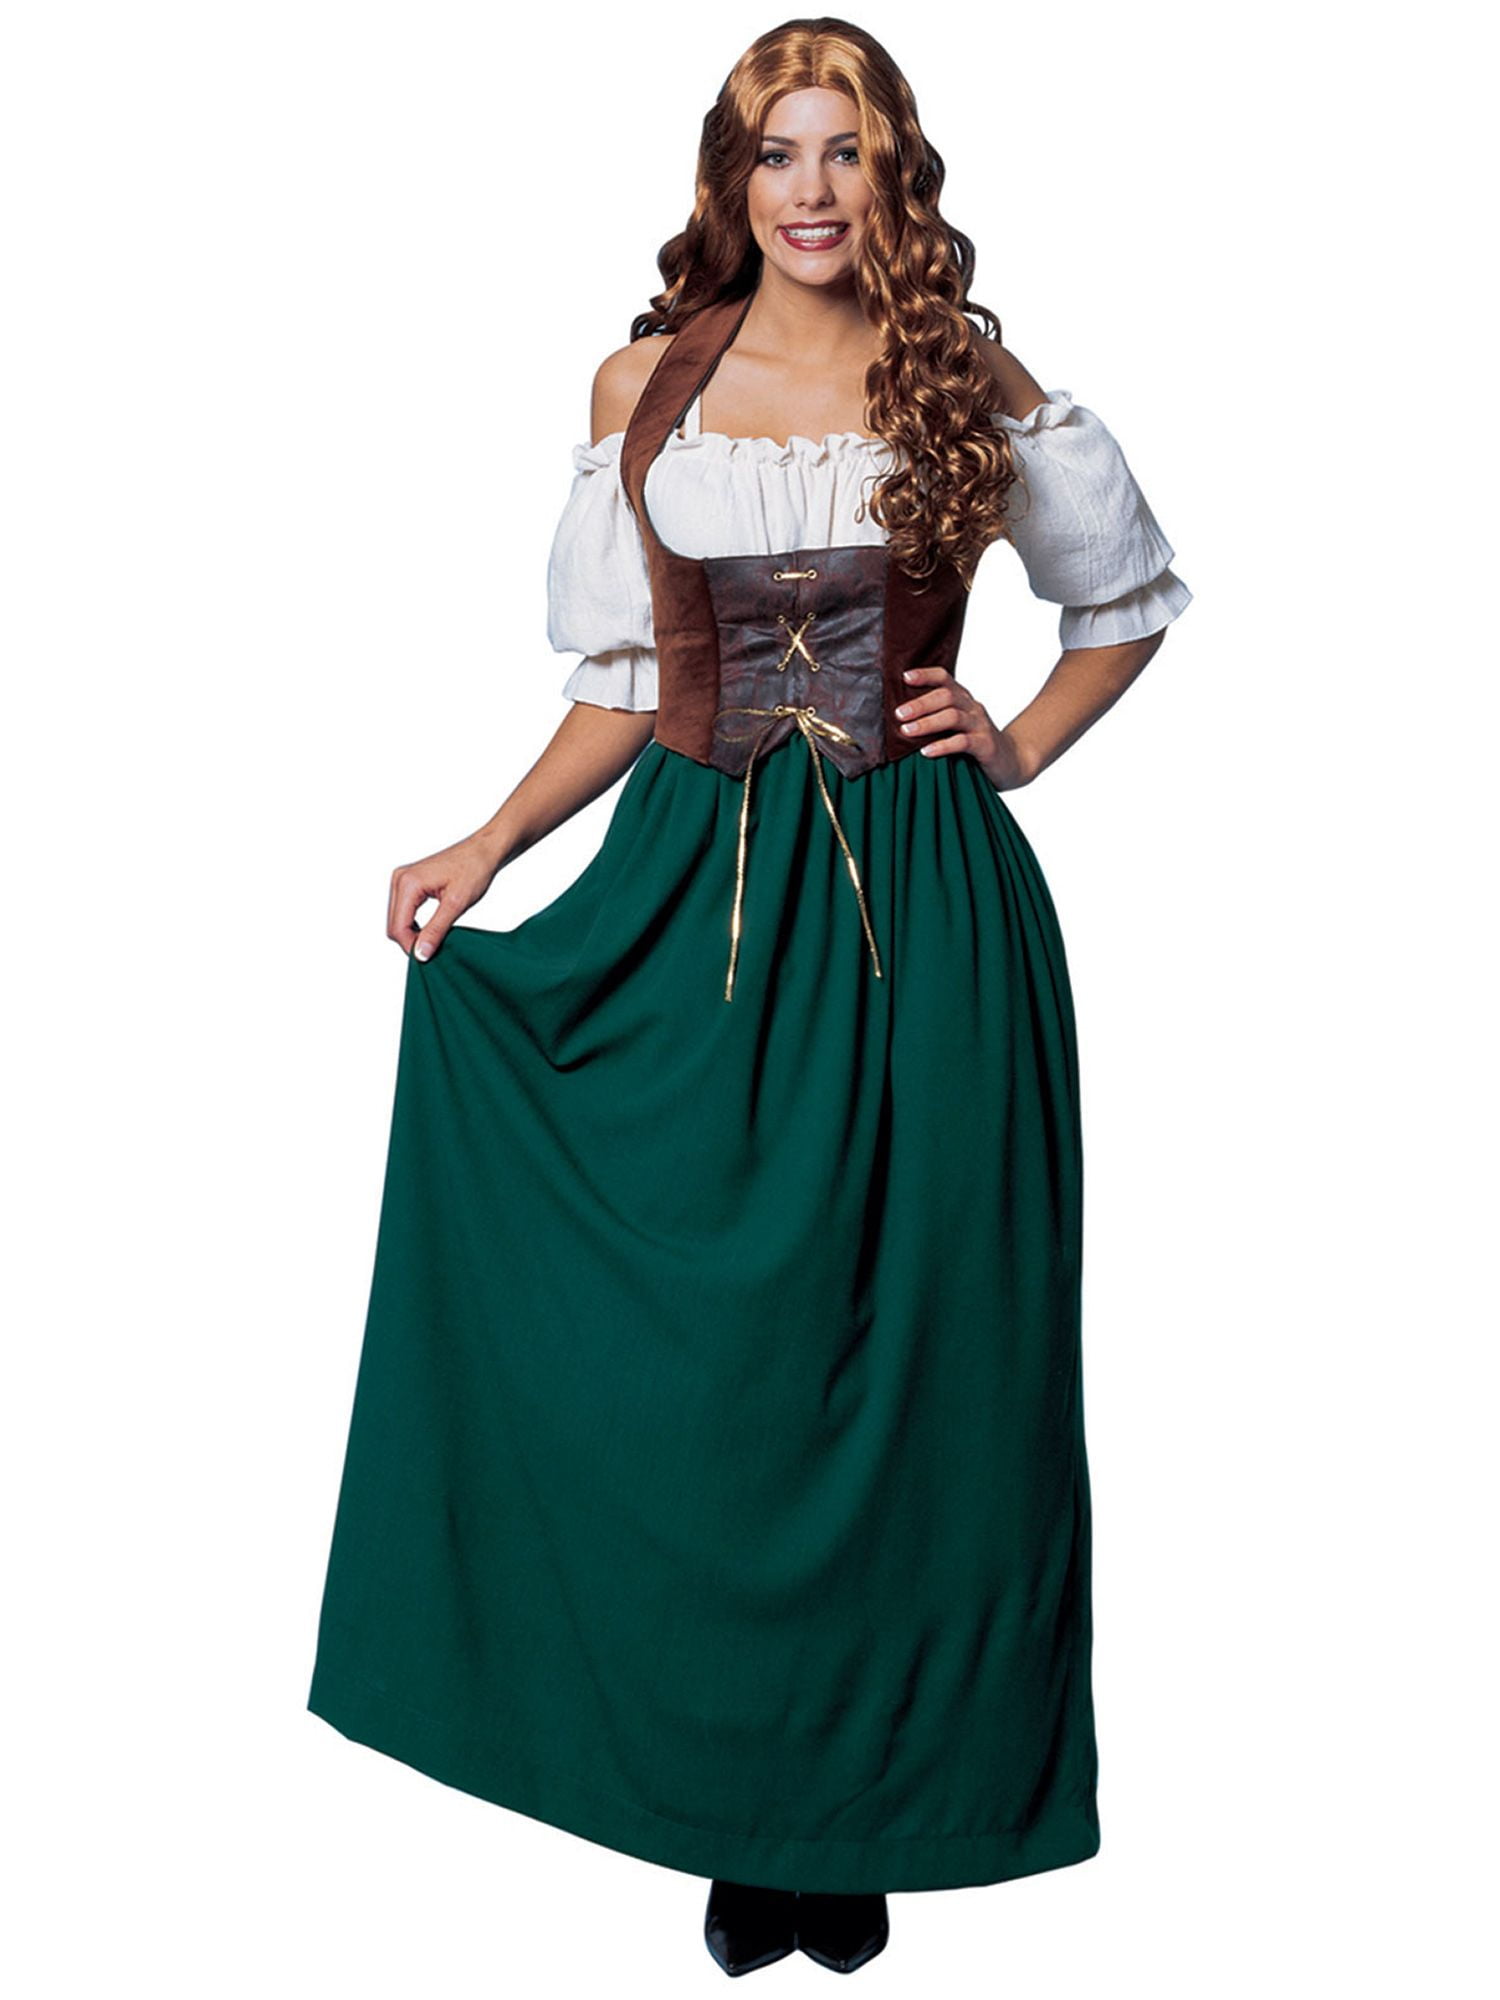 Medieval Peasant Costume for Women Renn Faire Ren Fair ...
 Red Medieval Peasant Dress